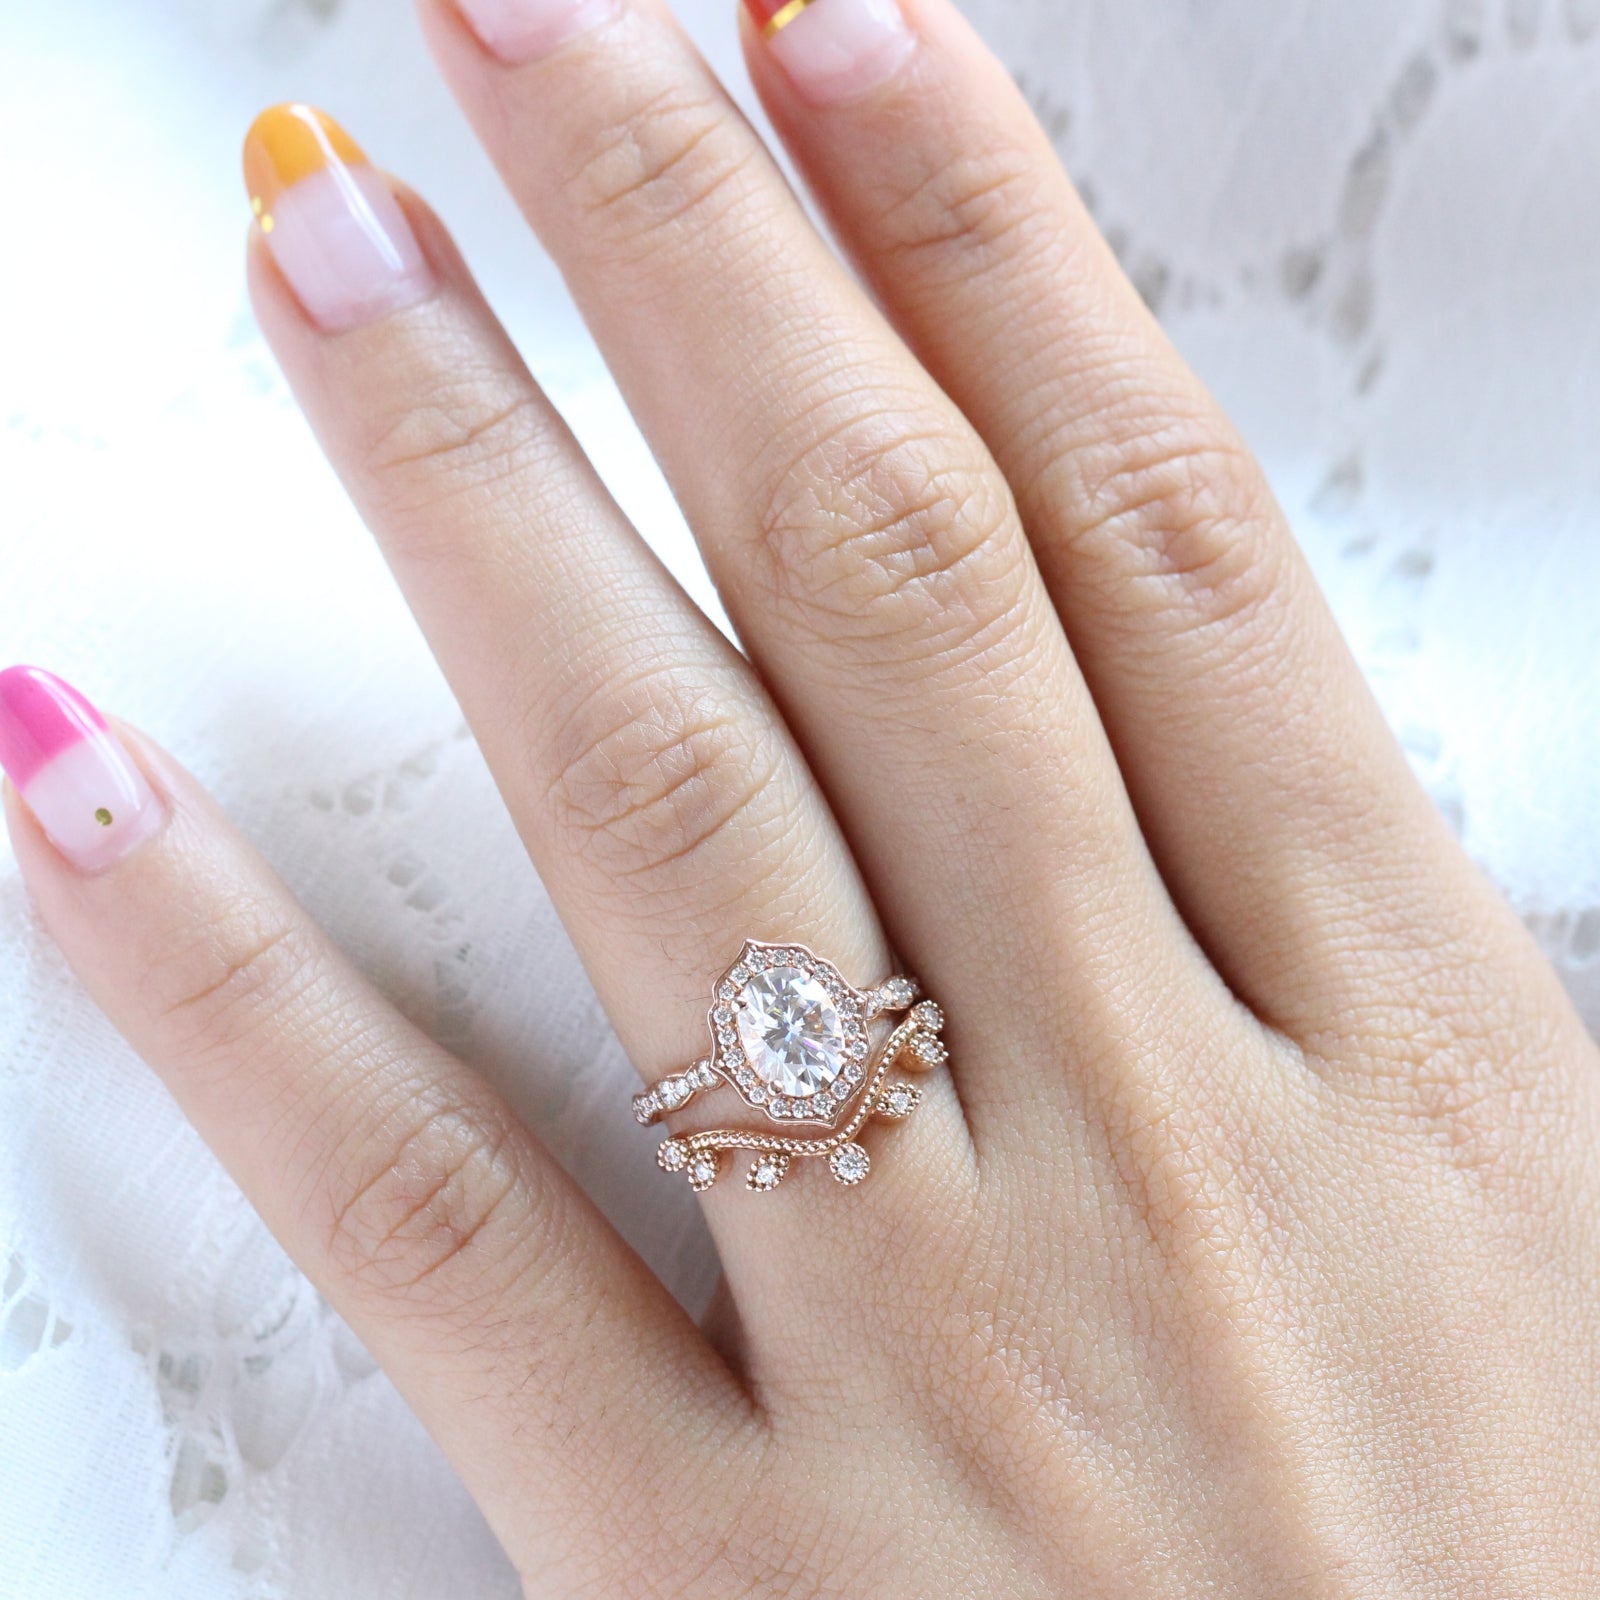 vintage floral diamond moissanite ring set rose gold curved leaf wedding band la more design jewelry